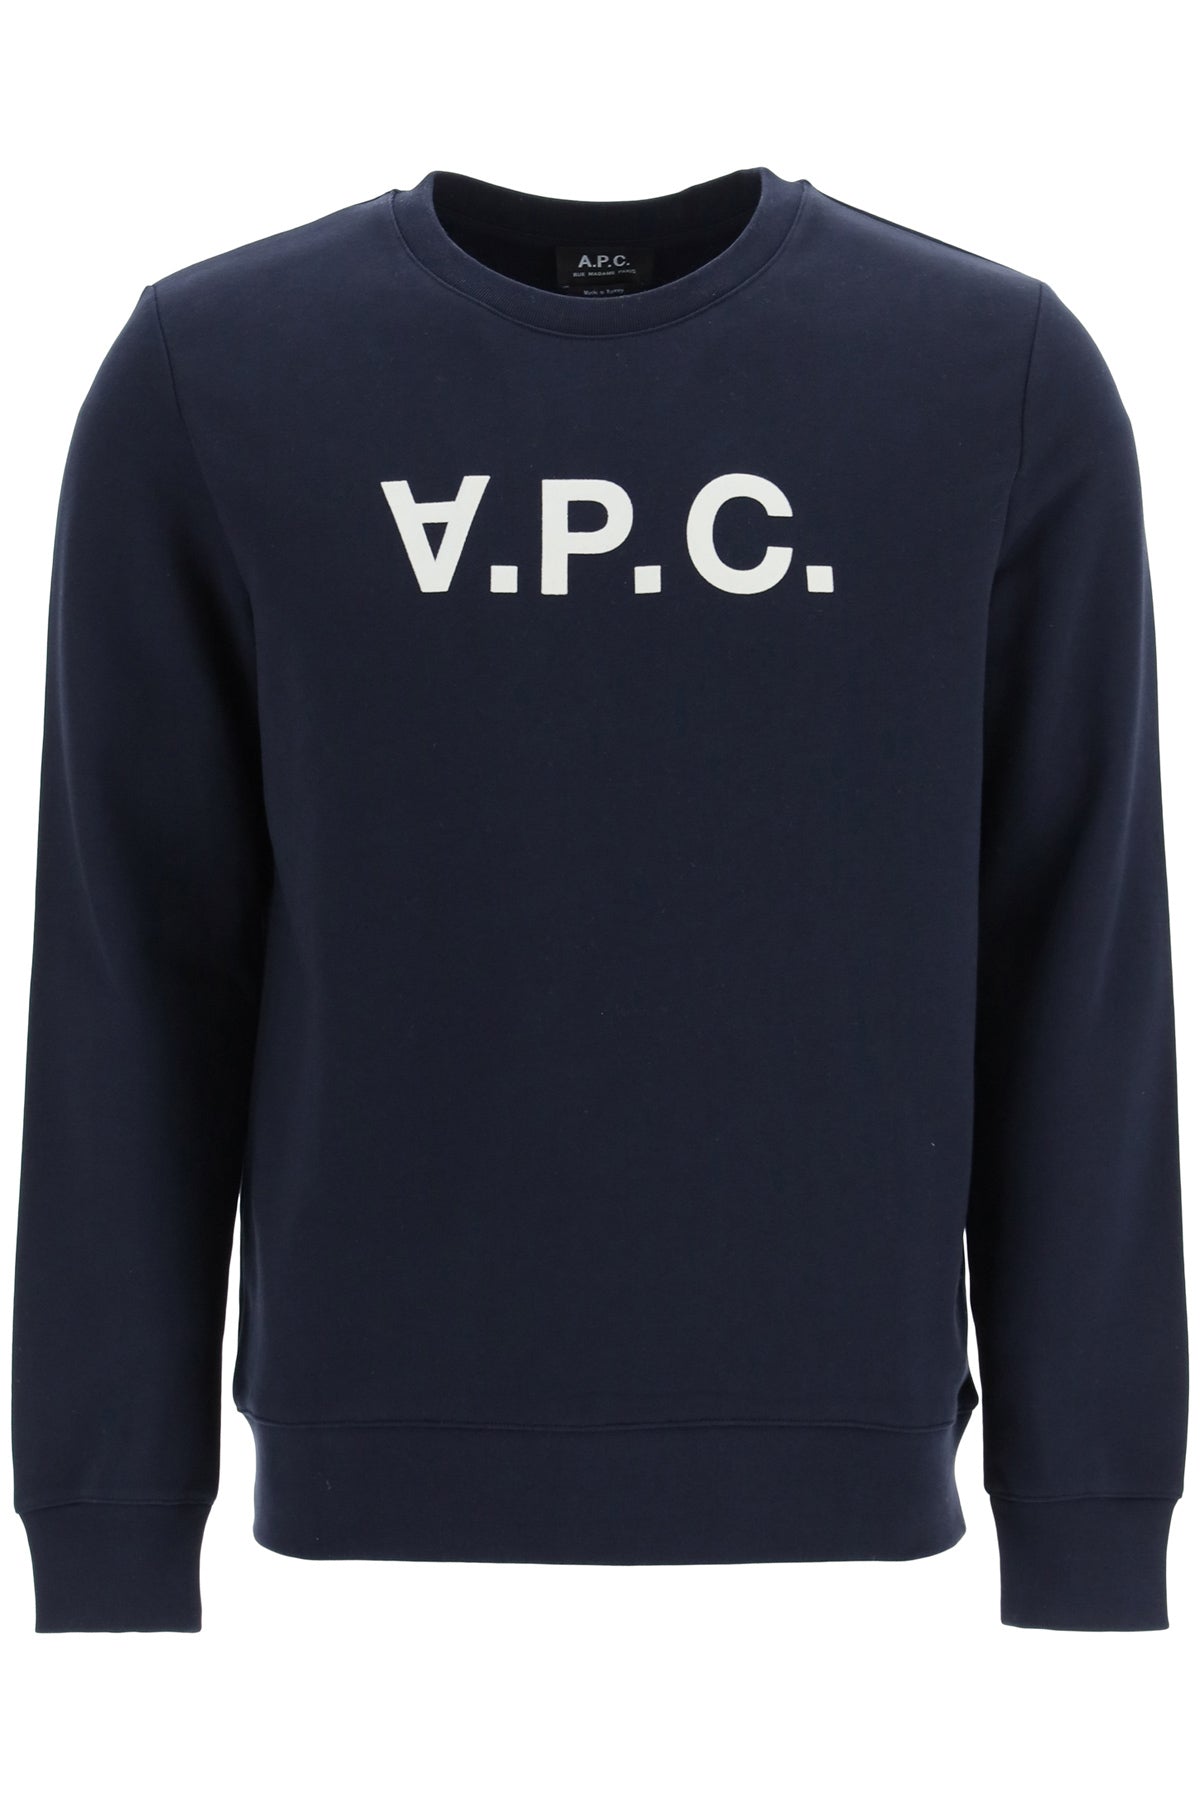 A.p.c. flock v.p.c. logo sweatshirt-0